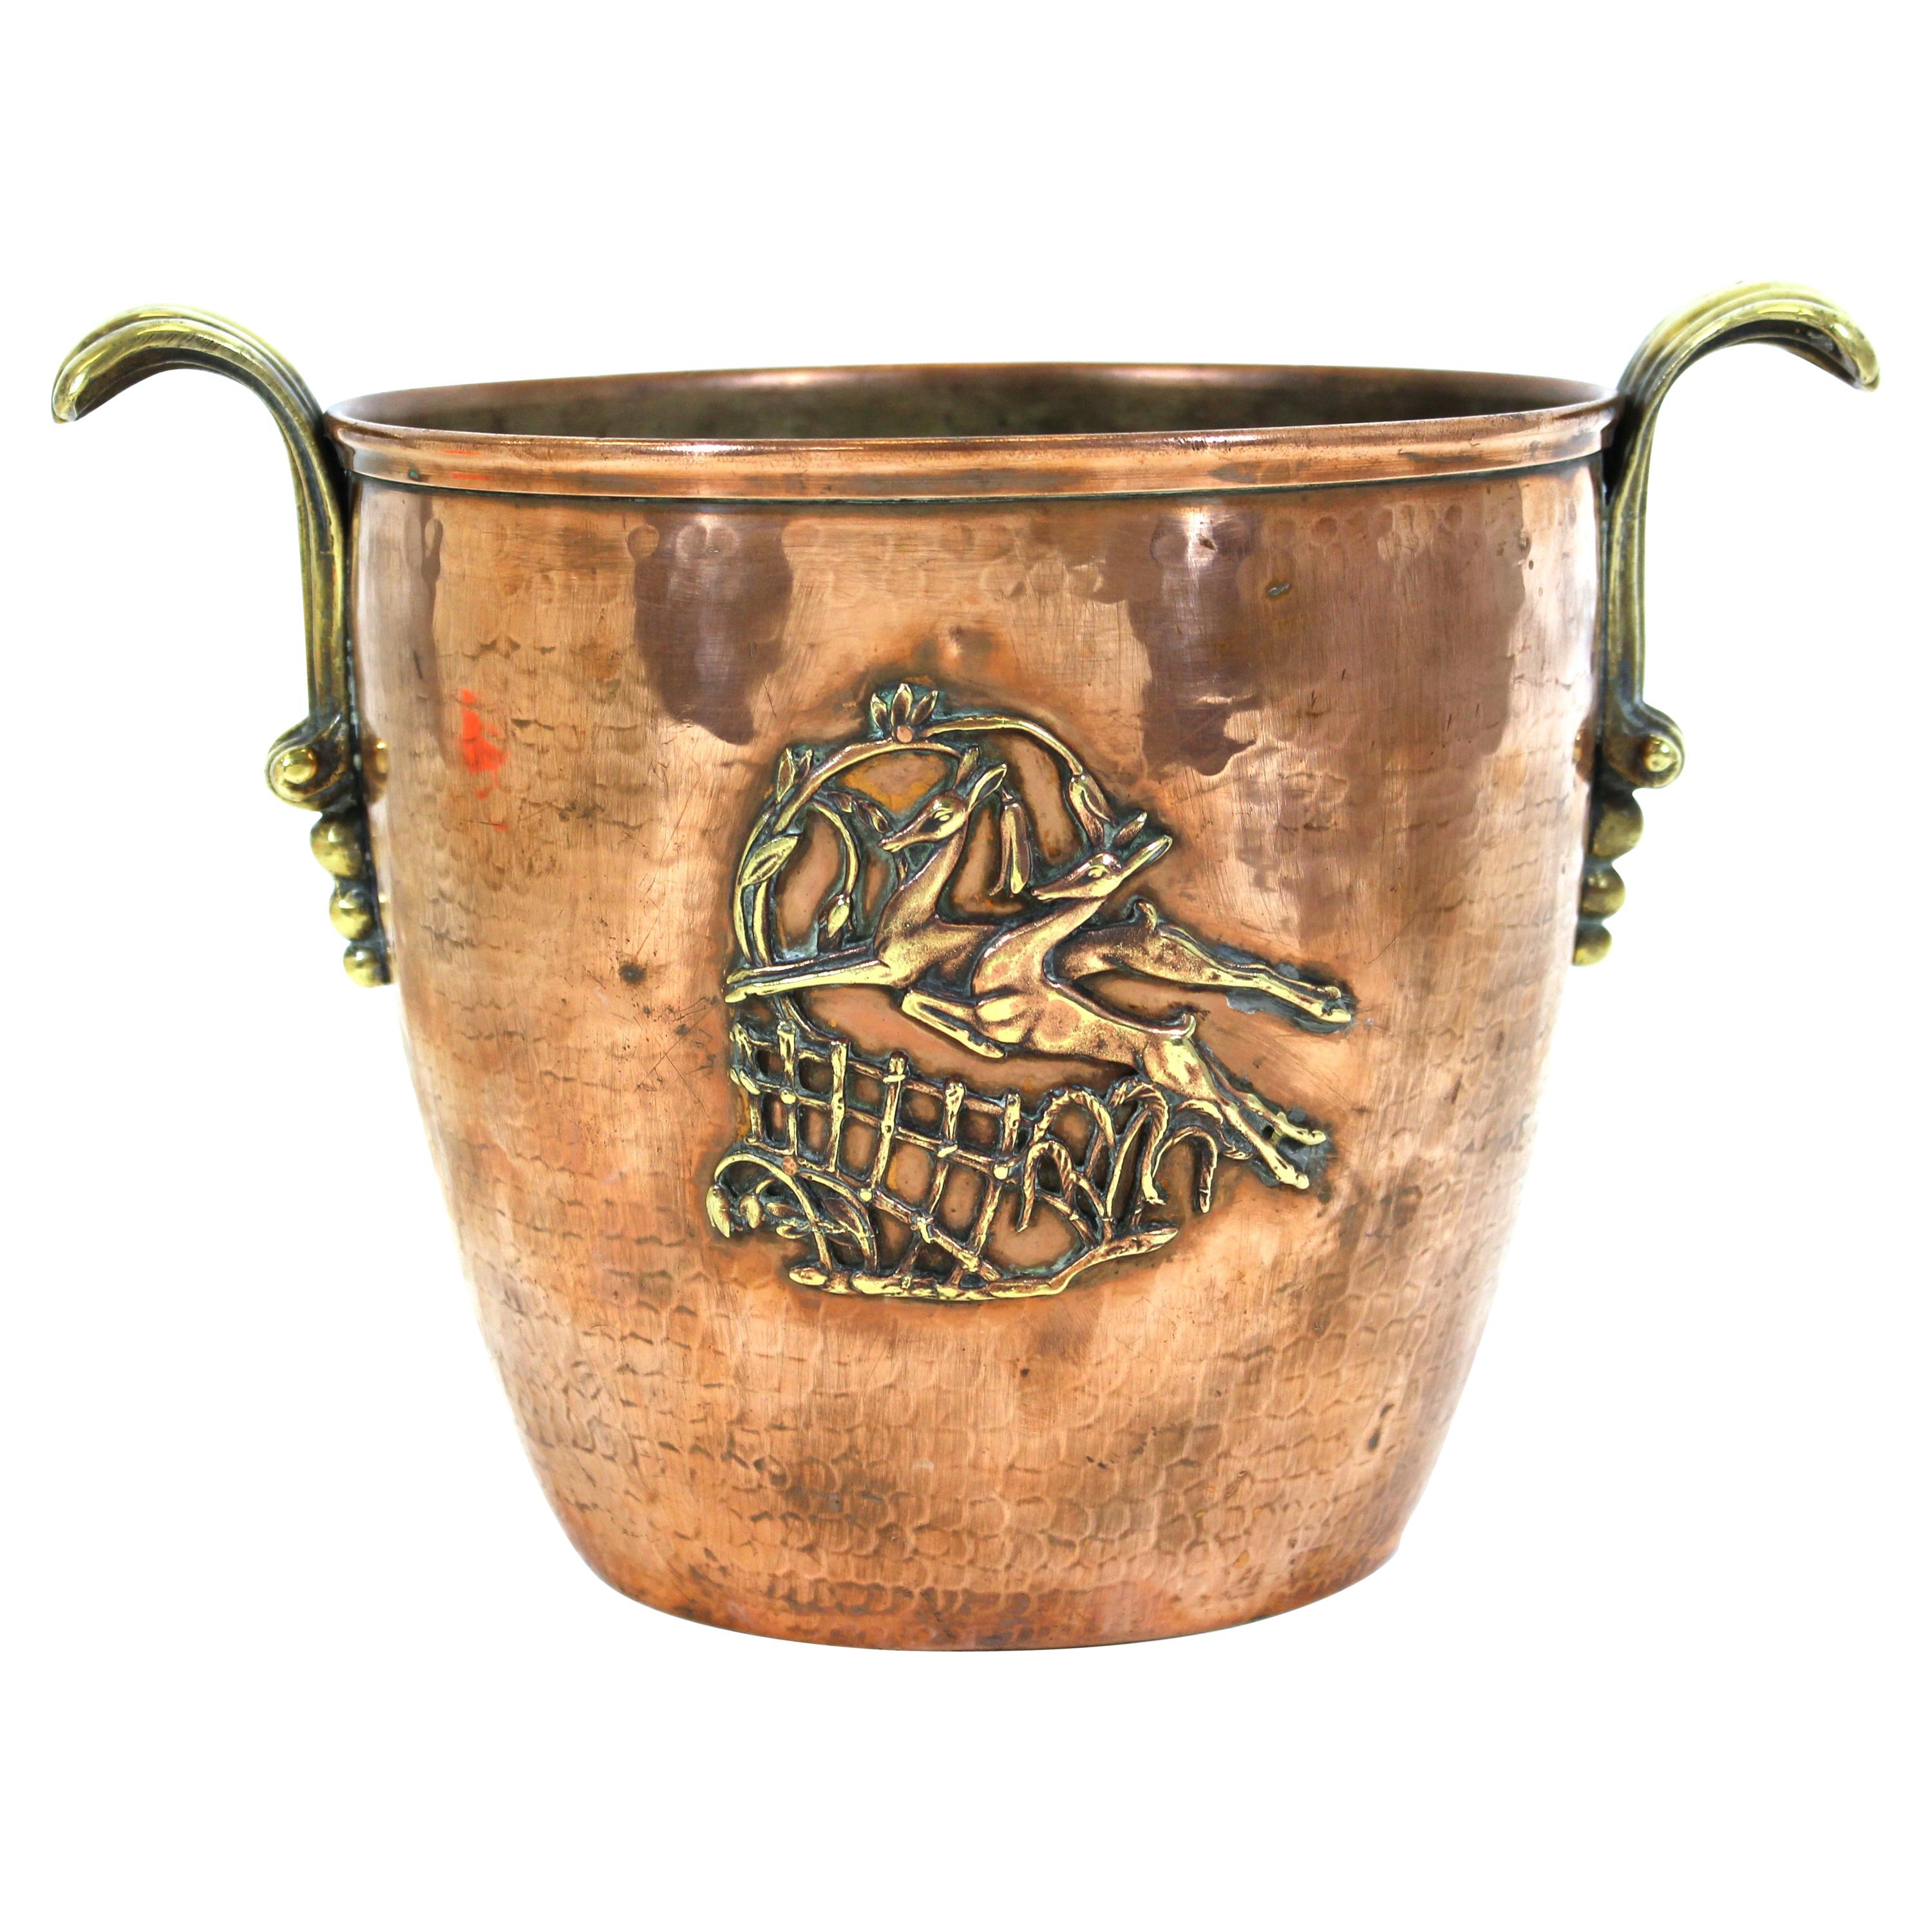 Austrian Art Deco Champagne or Wine Bucket in Copper & Brass with Gazelle Decor